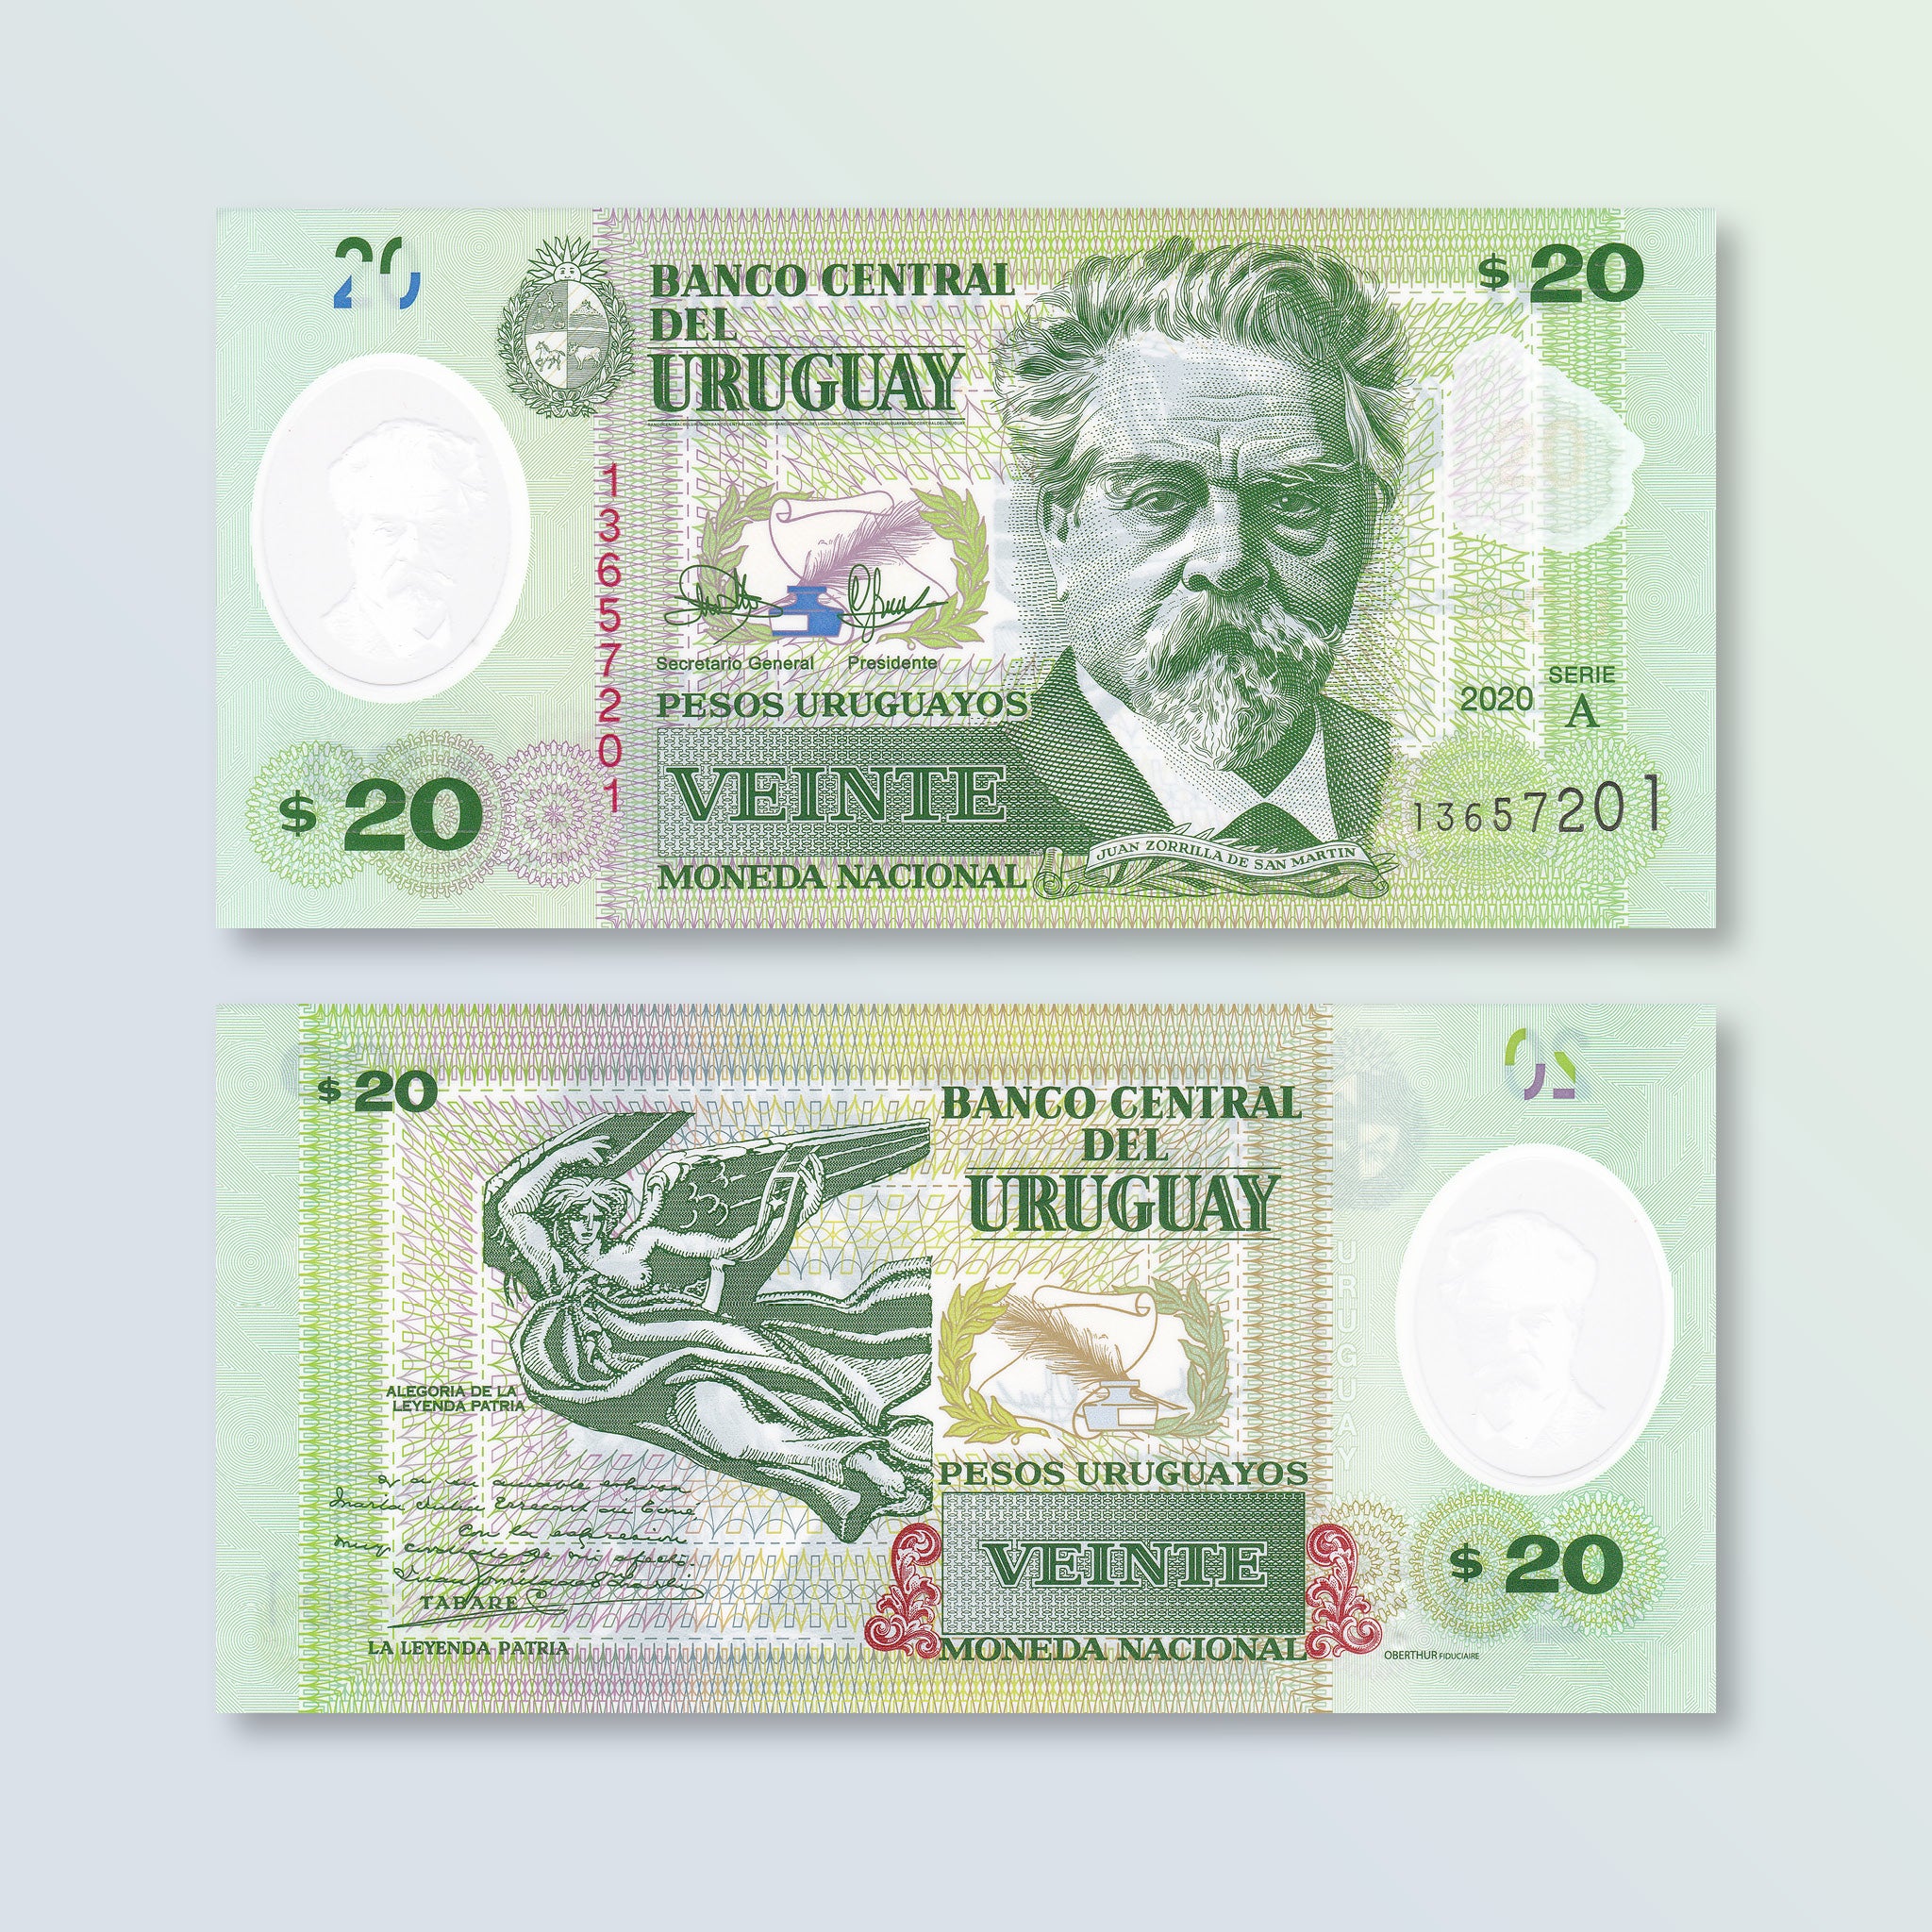 Uruguay 20 Pesos, 2020, B560a, UNC - Robert's World Money - World Banknotes